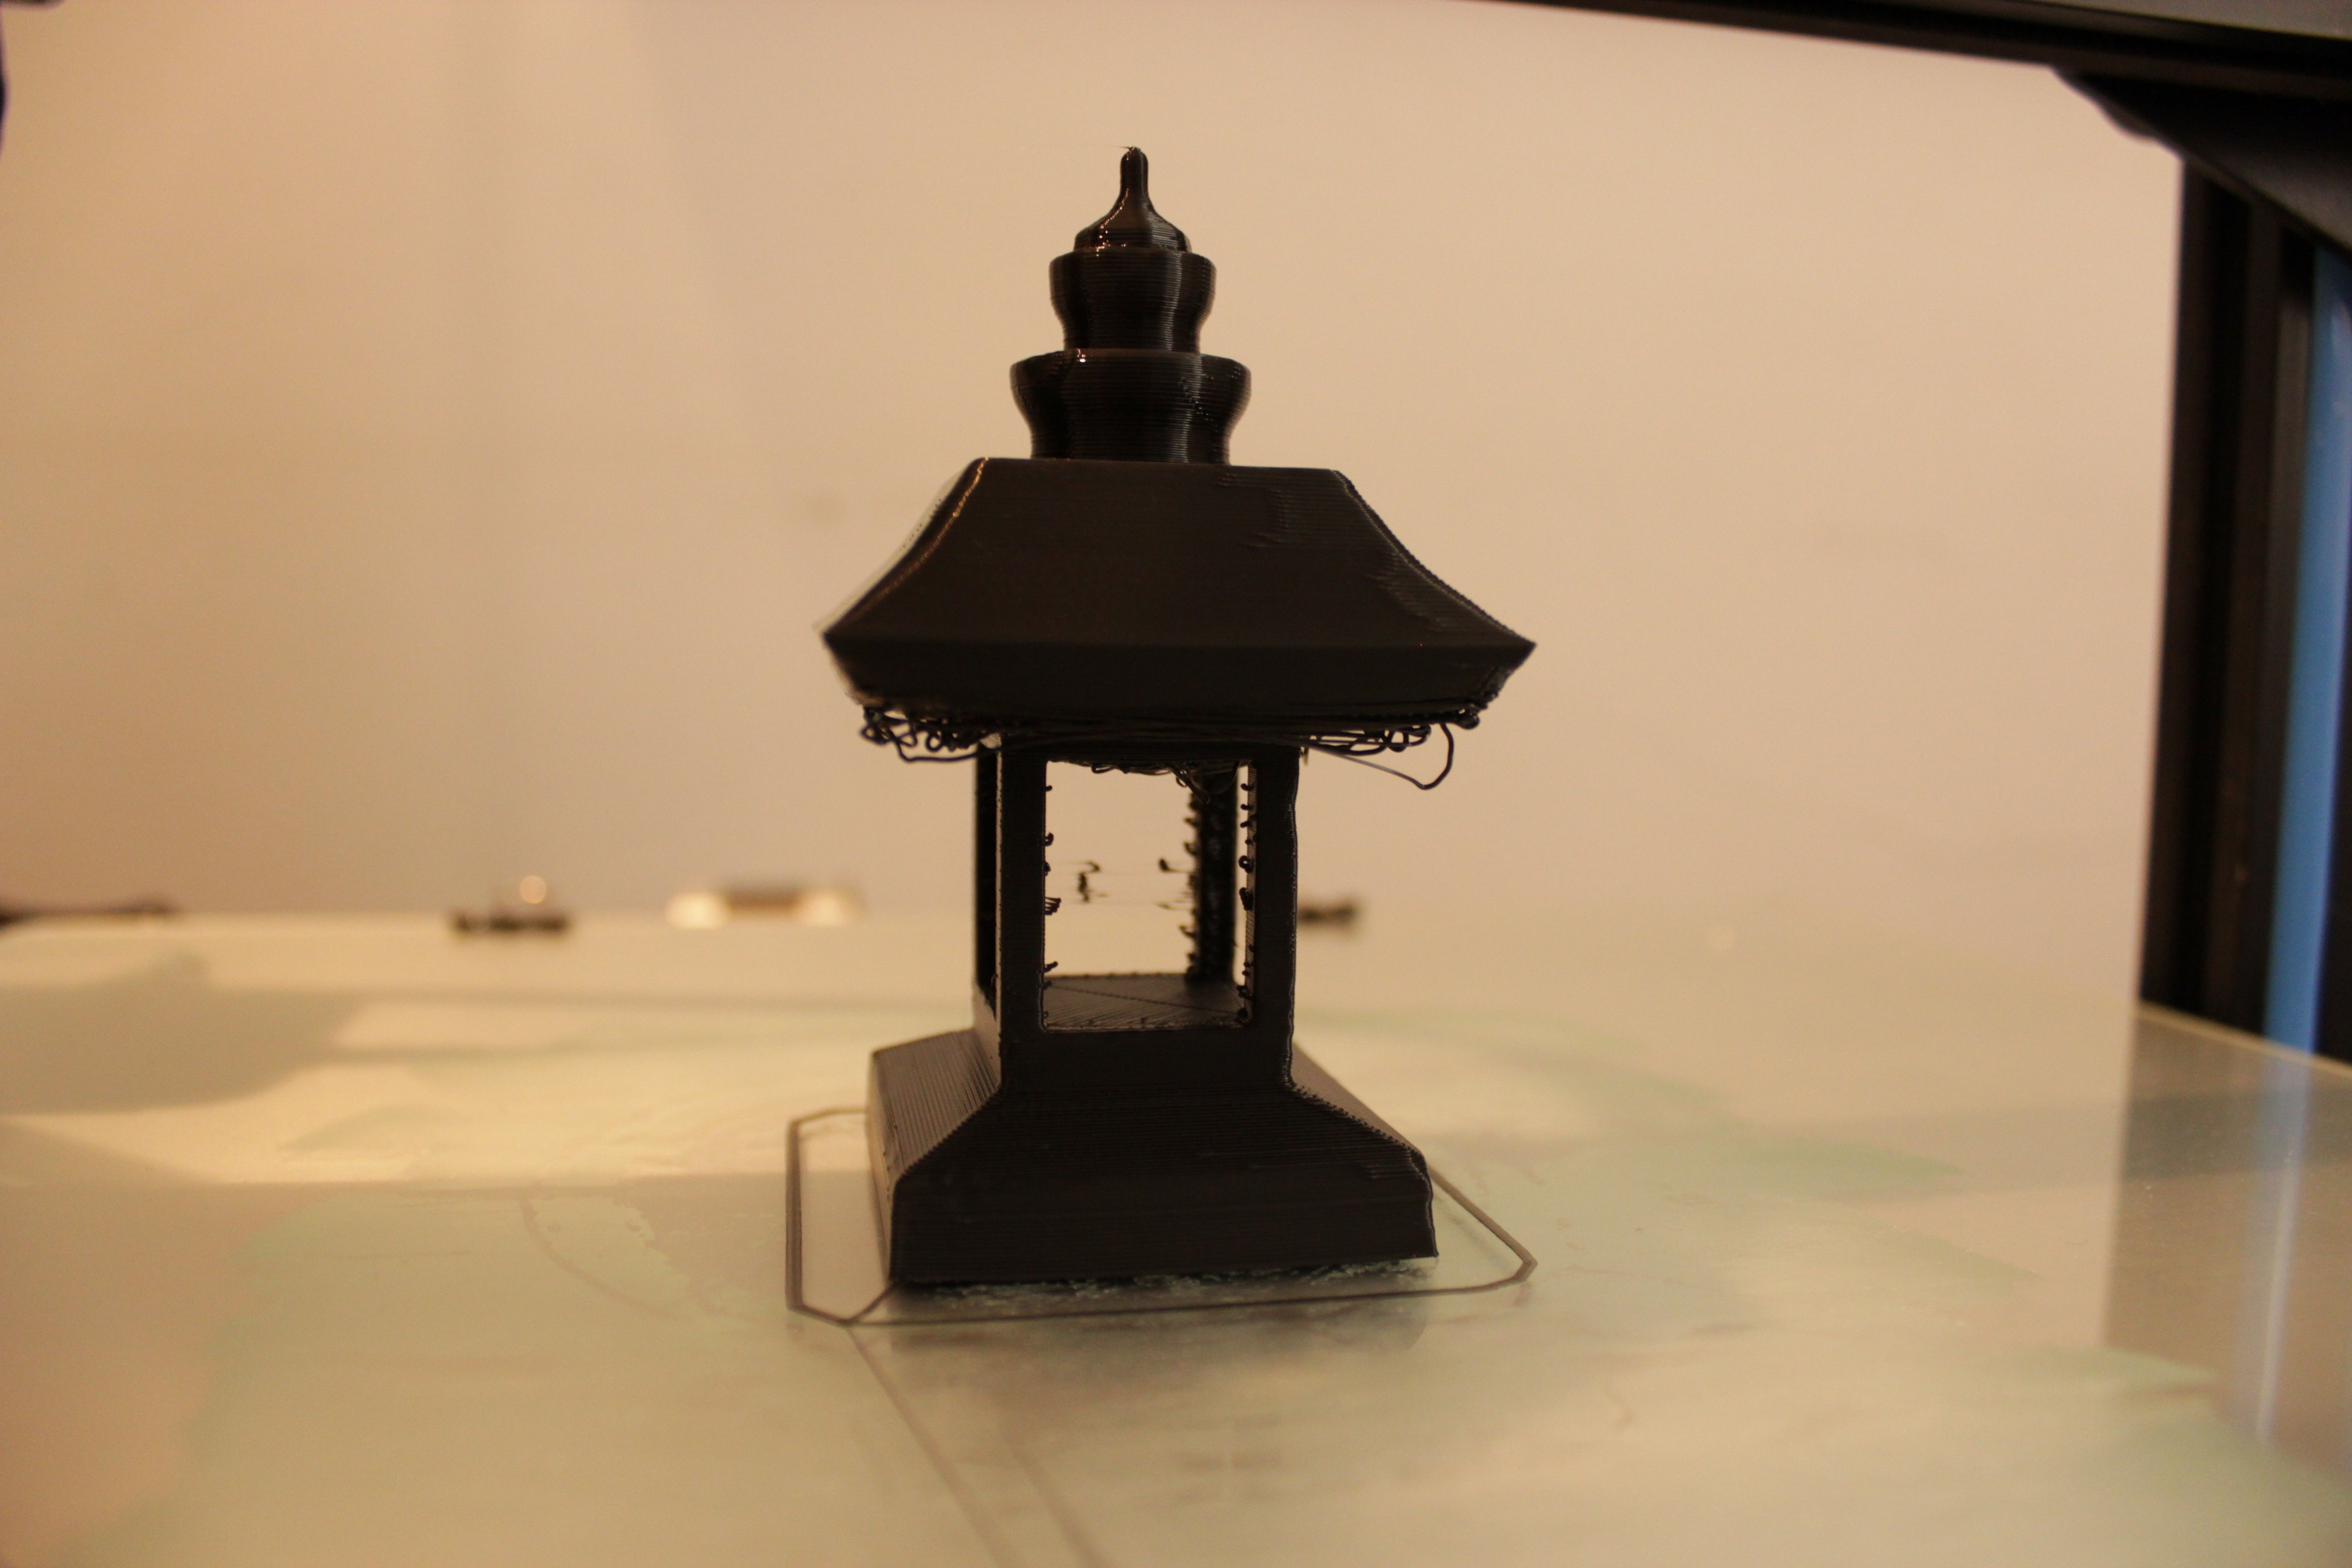 IMG_9455.JPG Free STL file Pagoda Garden Ornament・Design to download and 3D print, ricardo-jfa